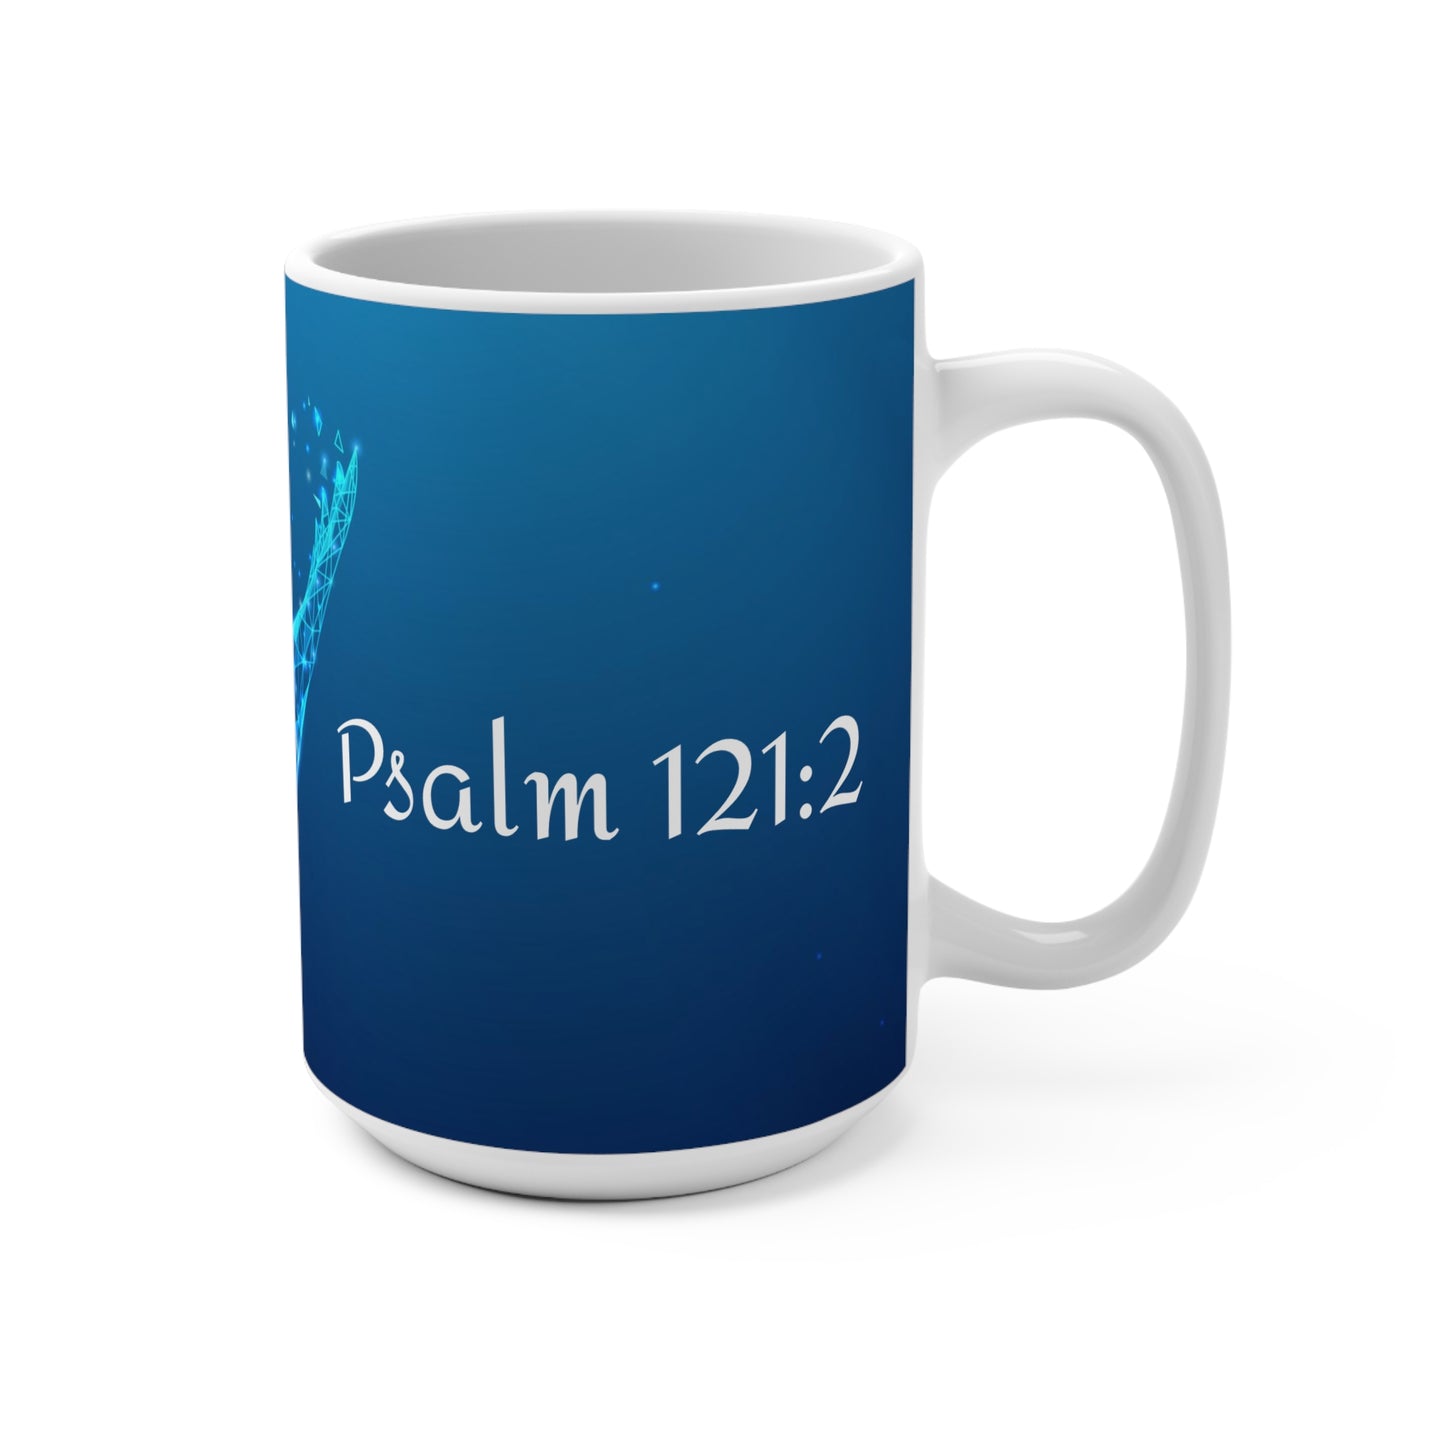 "Psalm 121:2" Inspirational Mug 15oz